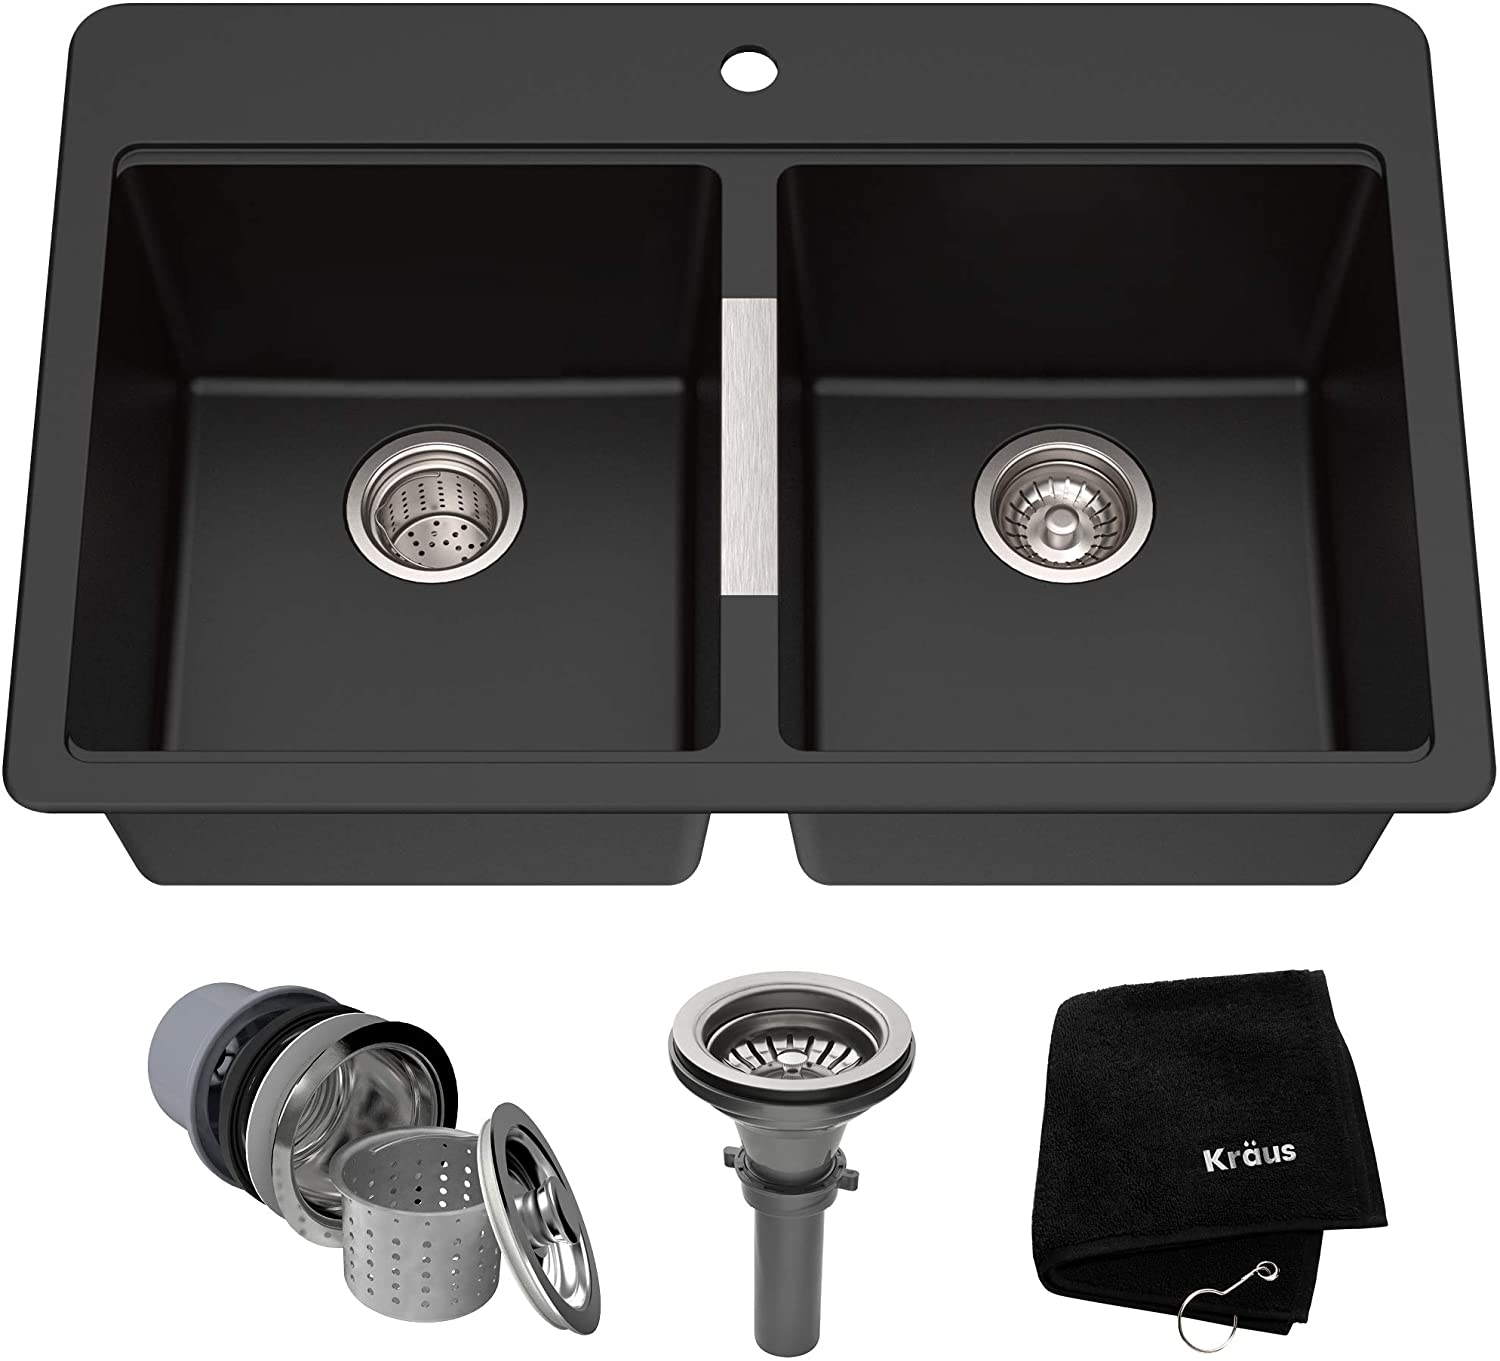 Kraus Quarza Kitchen Sink, 33-Inch Equal Bowls, Black Onyx Granite, KGD-433B model